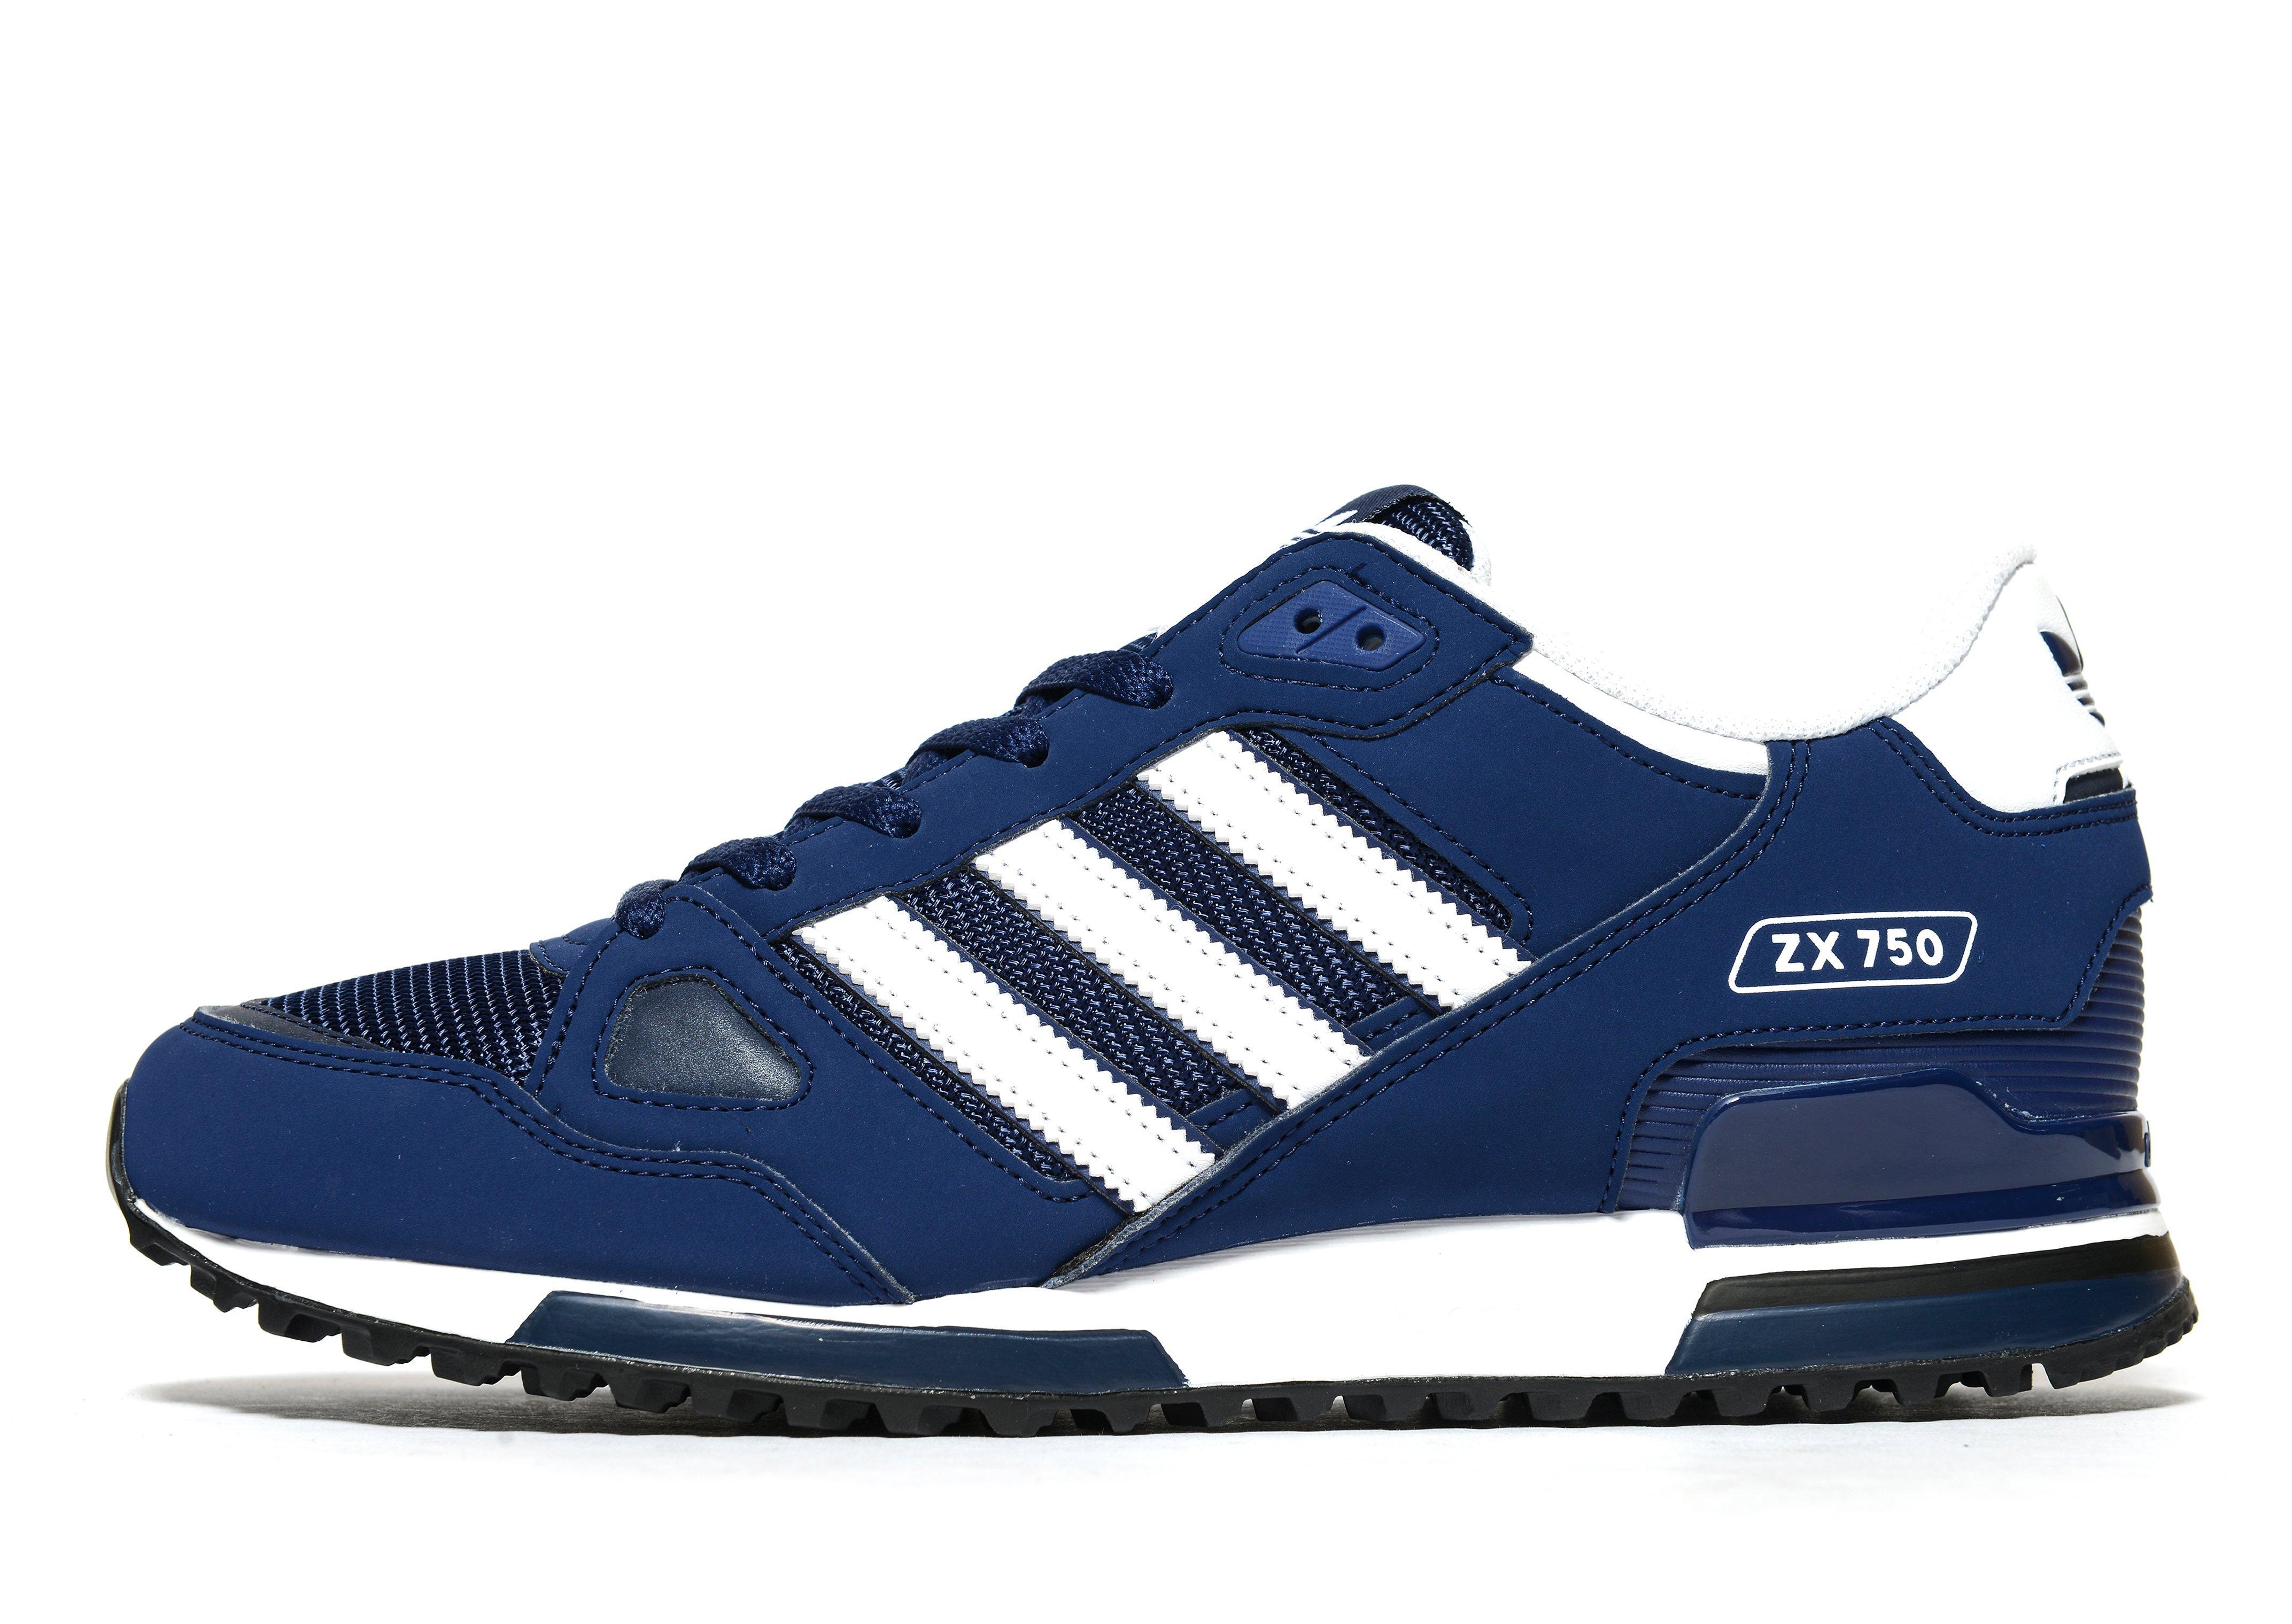 Lyst - Adidas Originals Zx 750 in Blue for Men